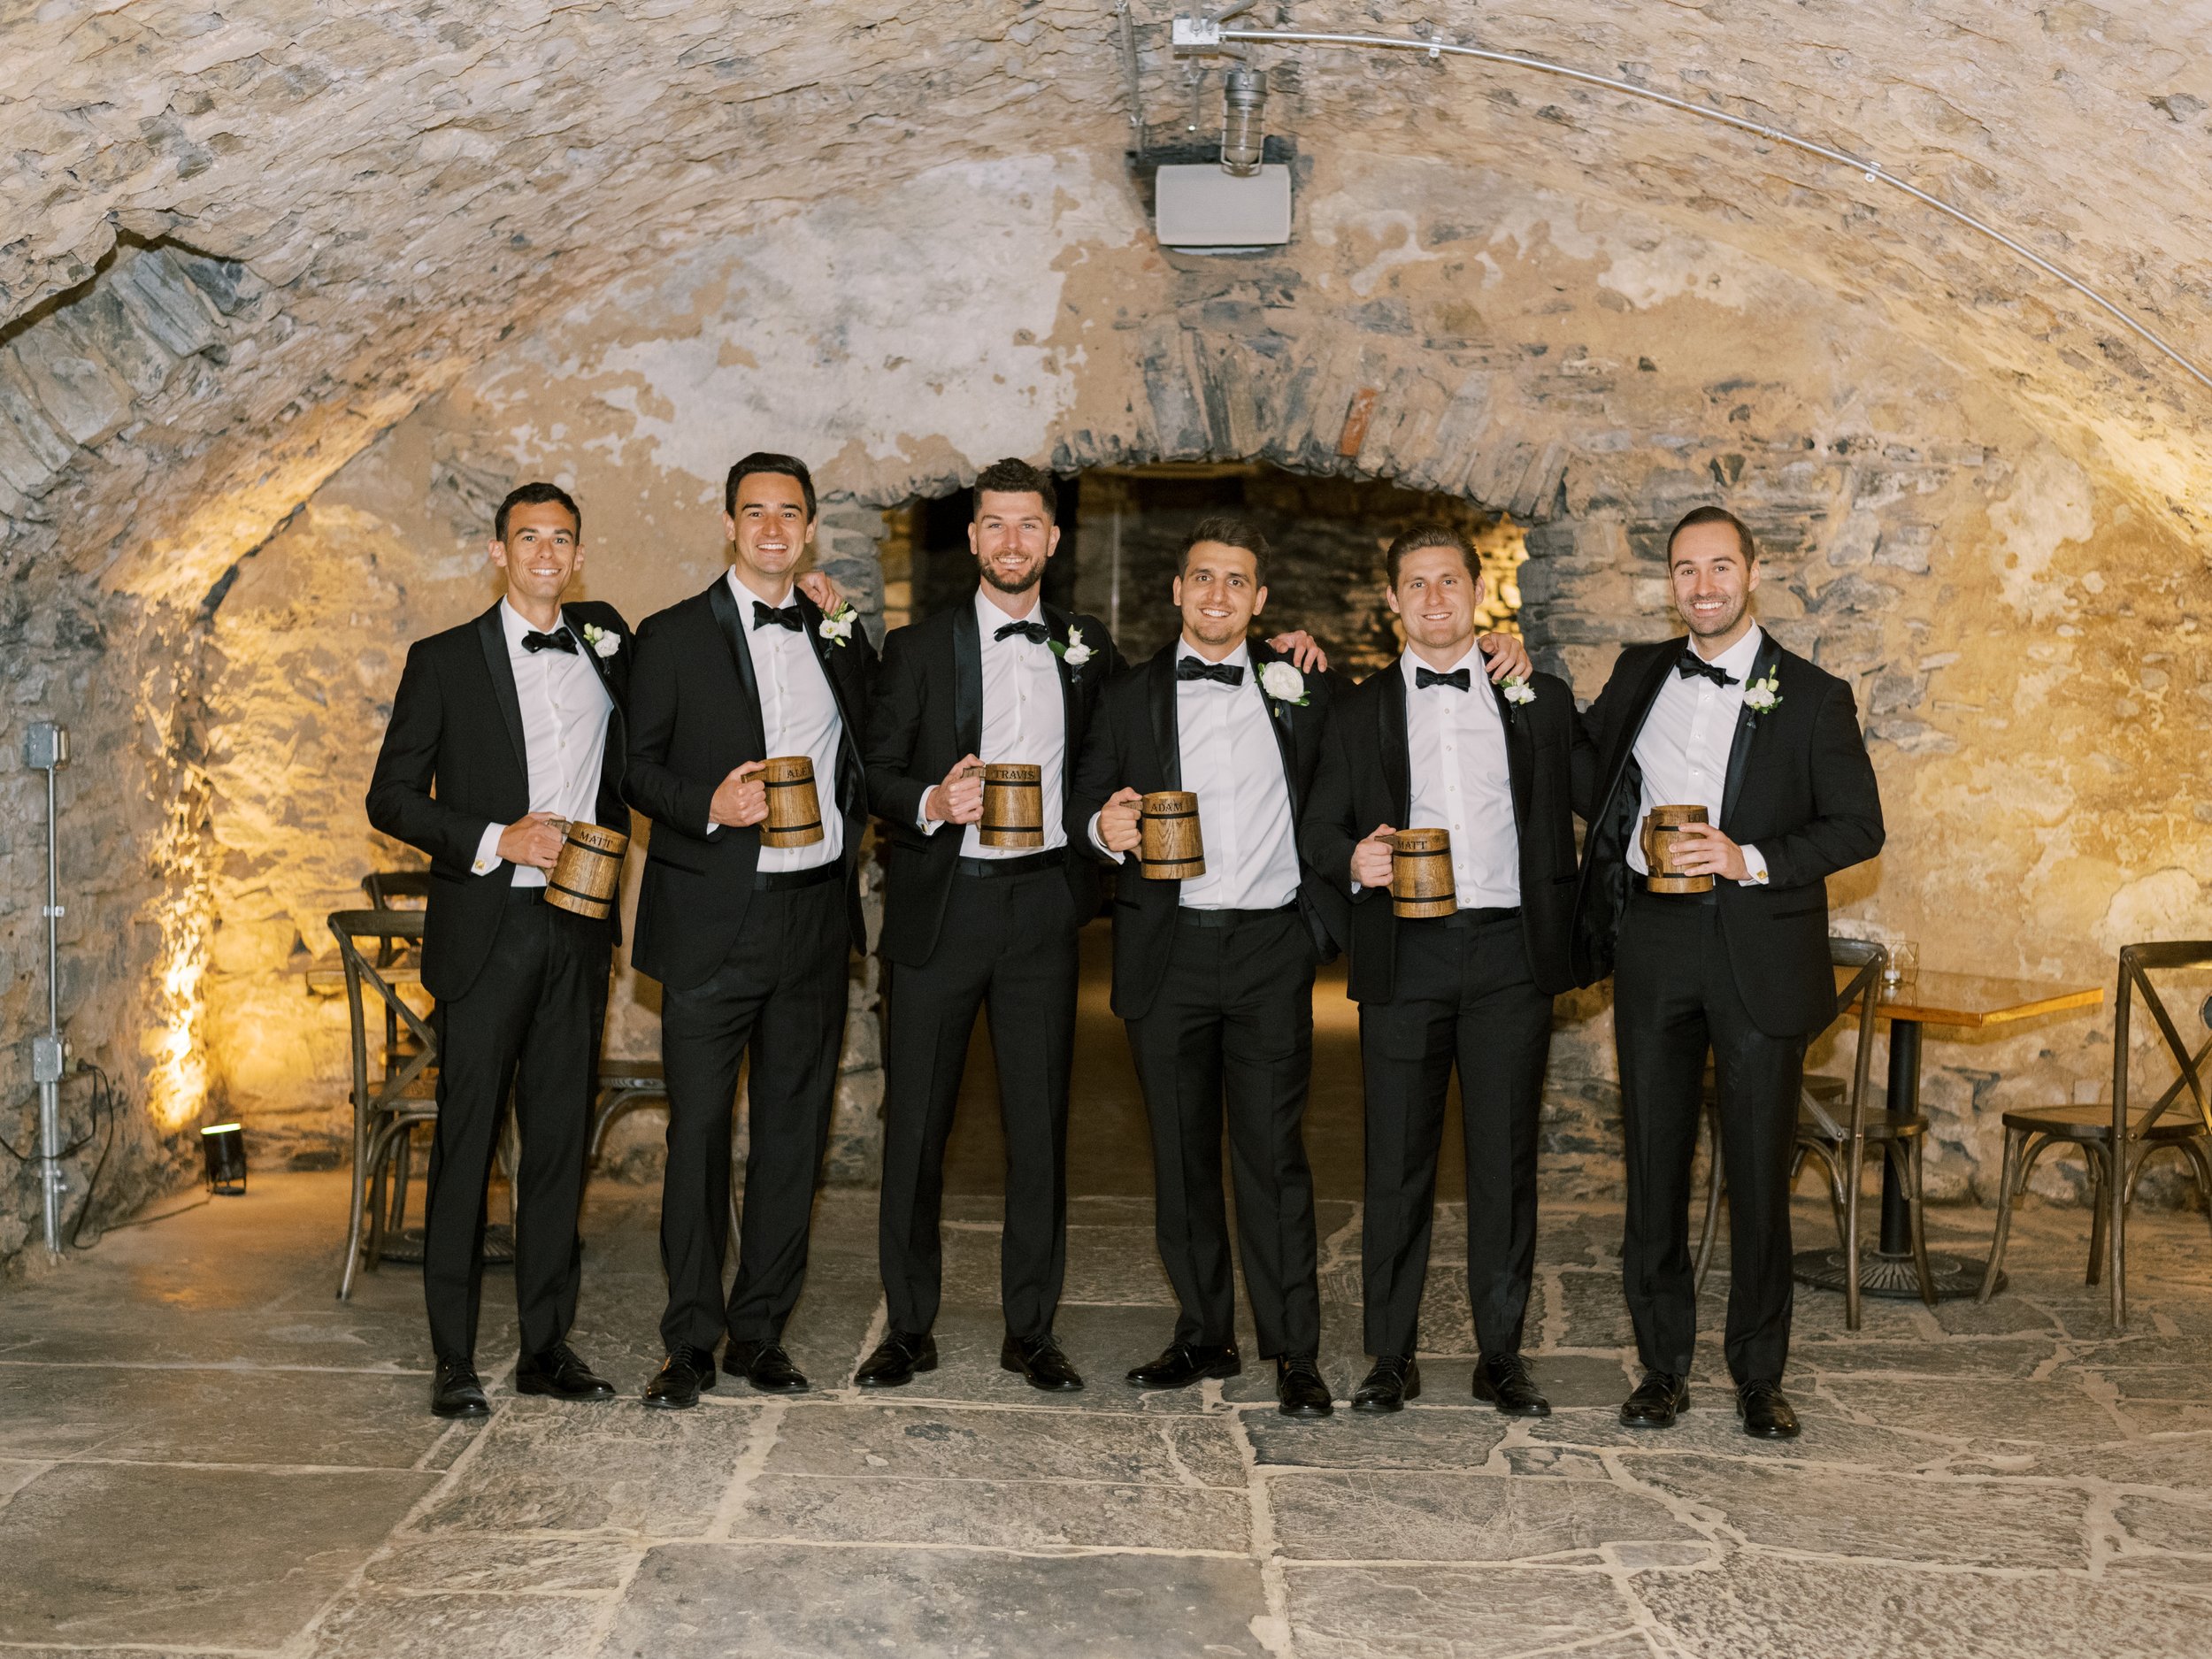 Groom and groomsmen holding beer mugs in catacombs of Excelsior wedding venue